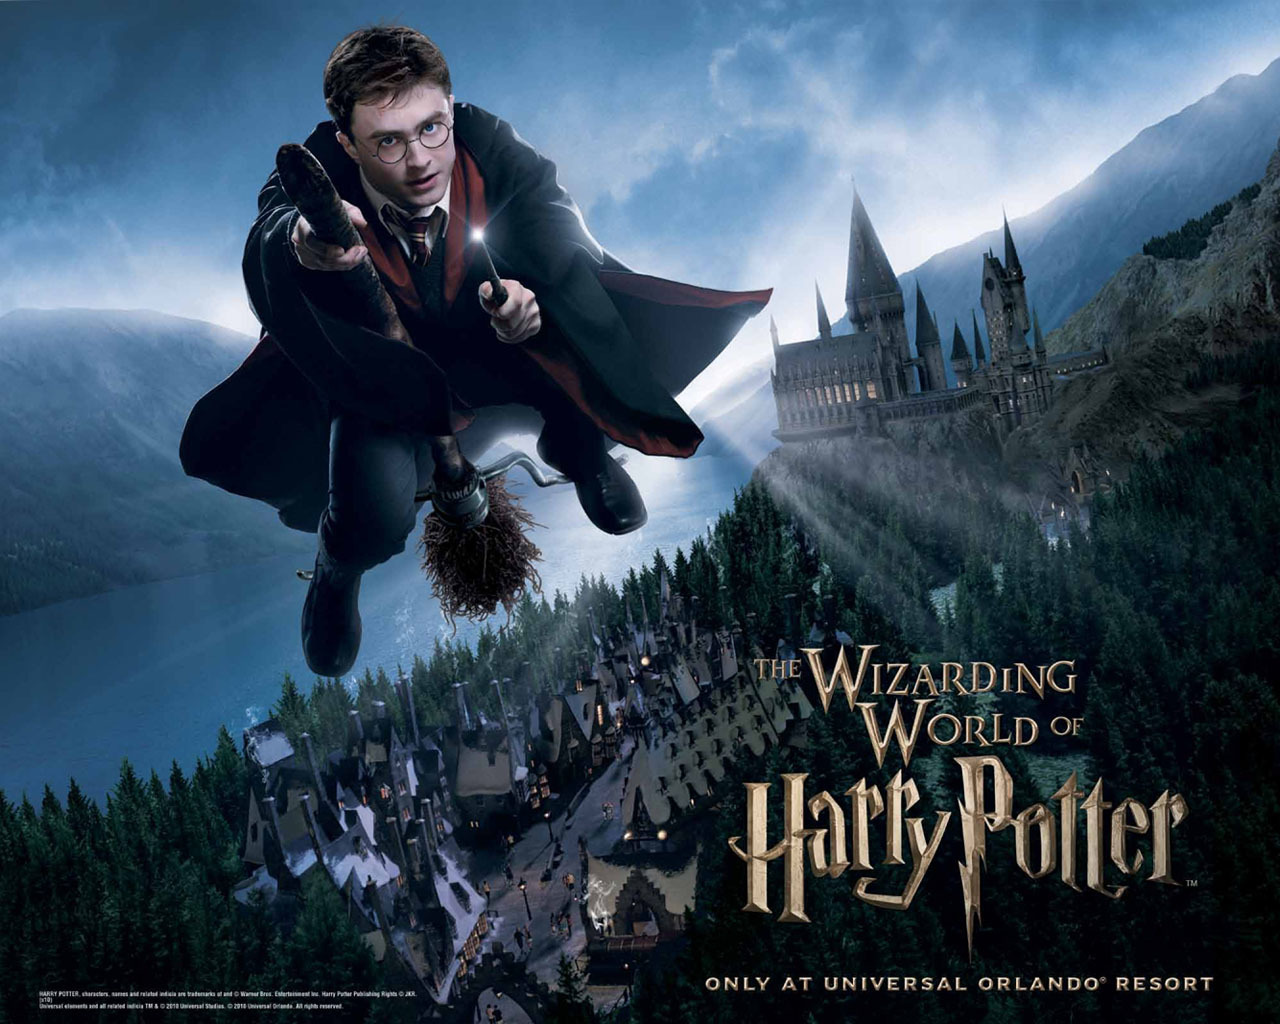 Wizarding World hình nền - Harry Potter hình nền (10393334) - fanpop